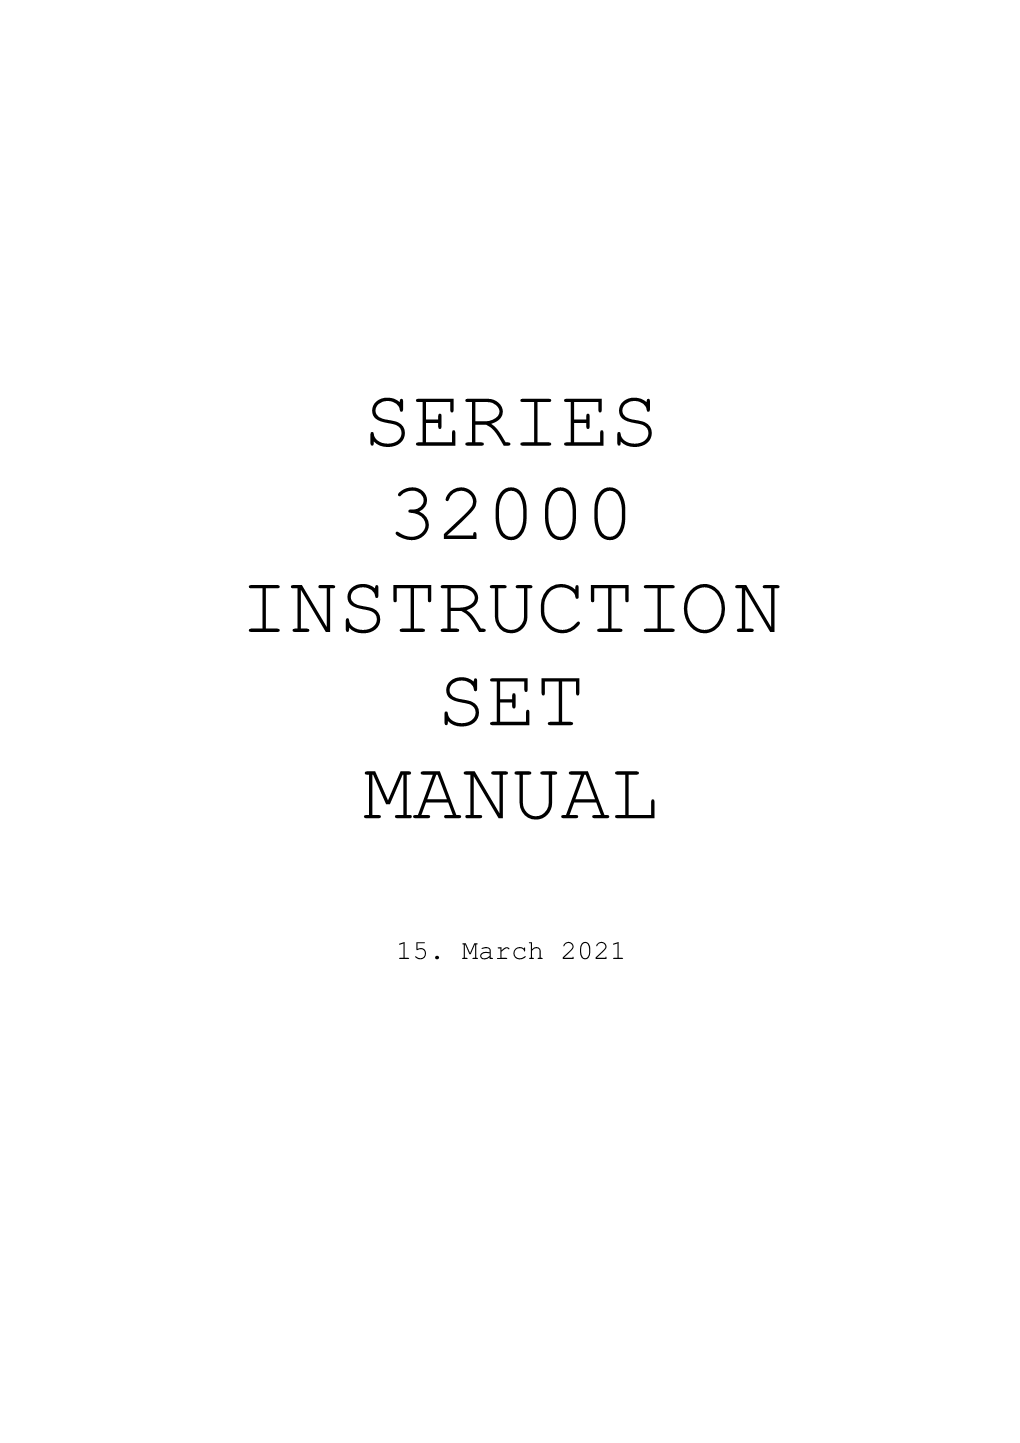 Series 32000 Instruction Set Manual 15.3.2021